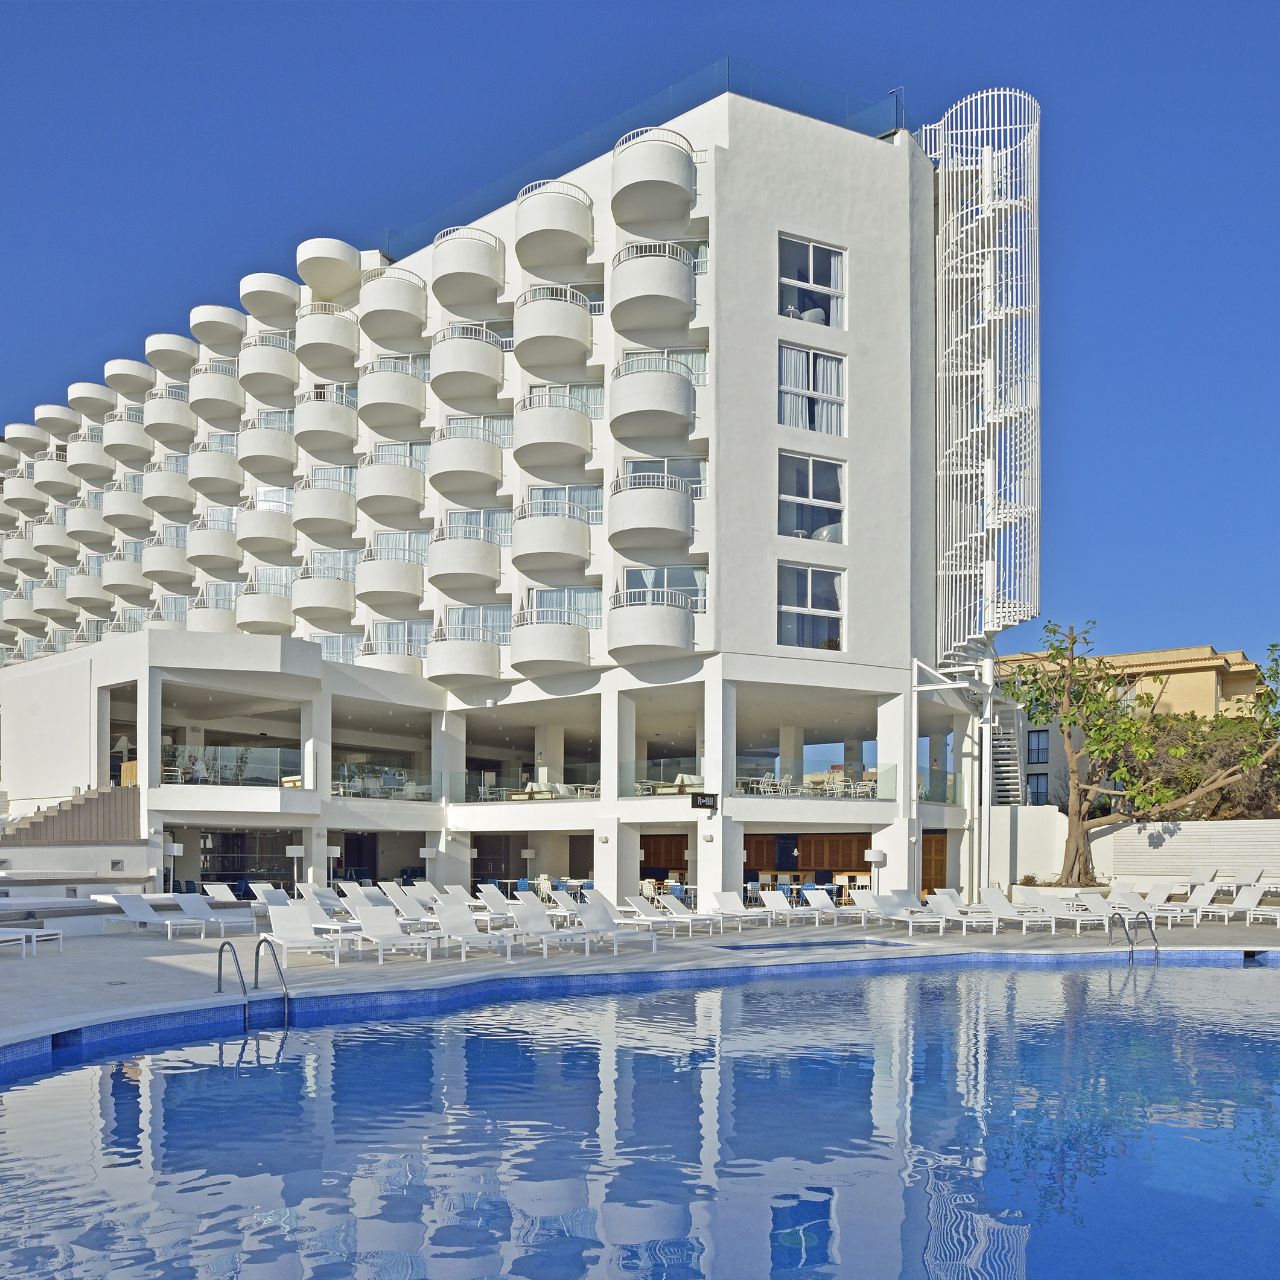 Hotel SOL HOUSE IBIZA - Sant Antoni de Portmany - Great prices at HOTEL INFO